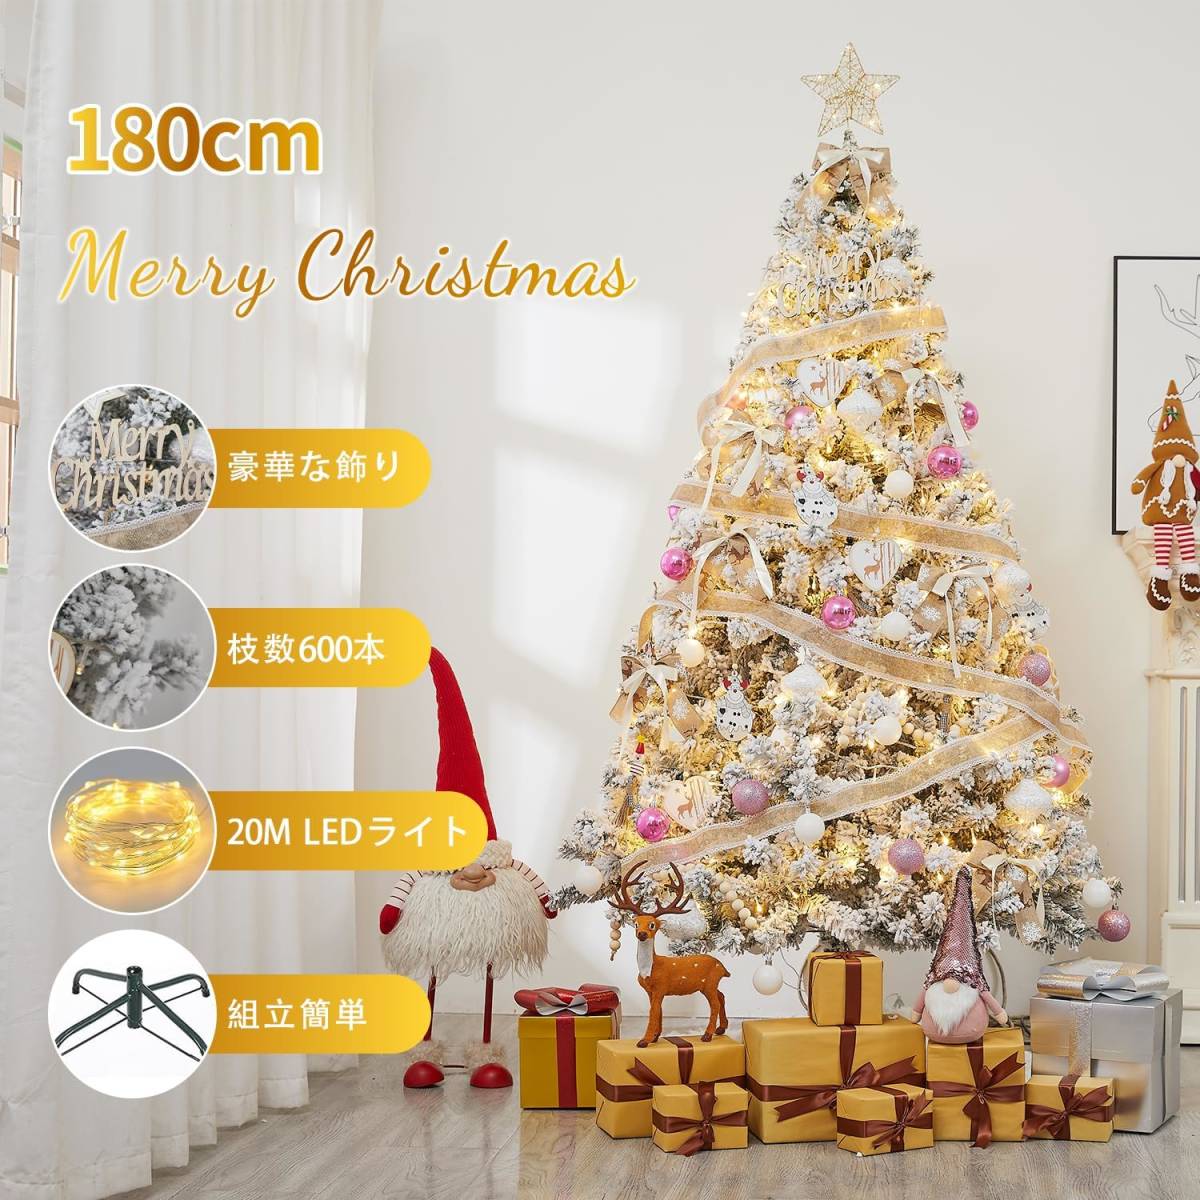 UPFUN クリスマスツリー 180cm christmas tree 高濃密度 枝数600本 20mLED飾りライト付き 9mリボン付き 組立簡単  収納便利 クリスマス飾り